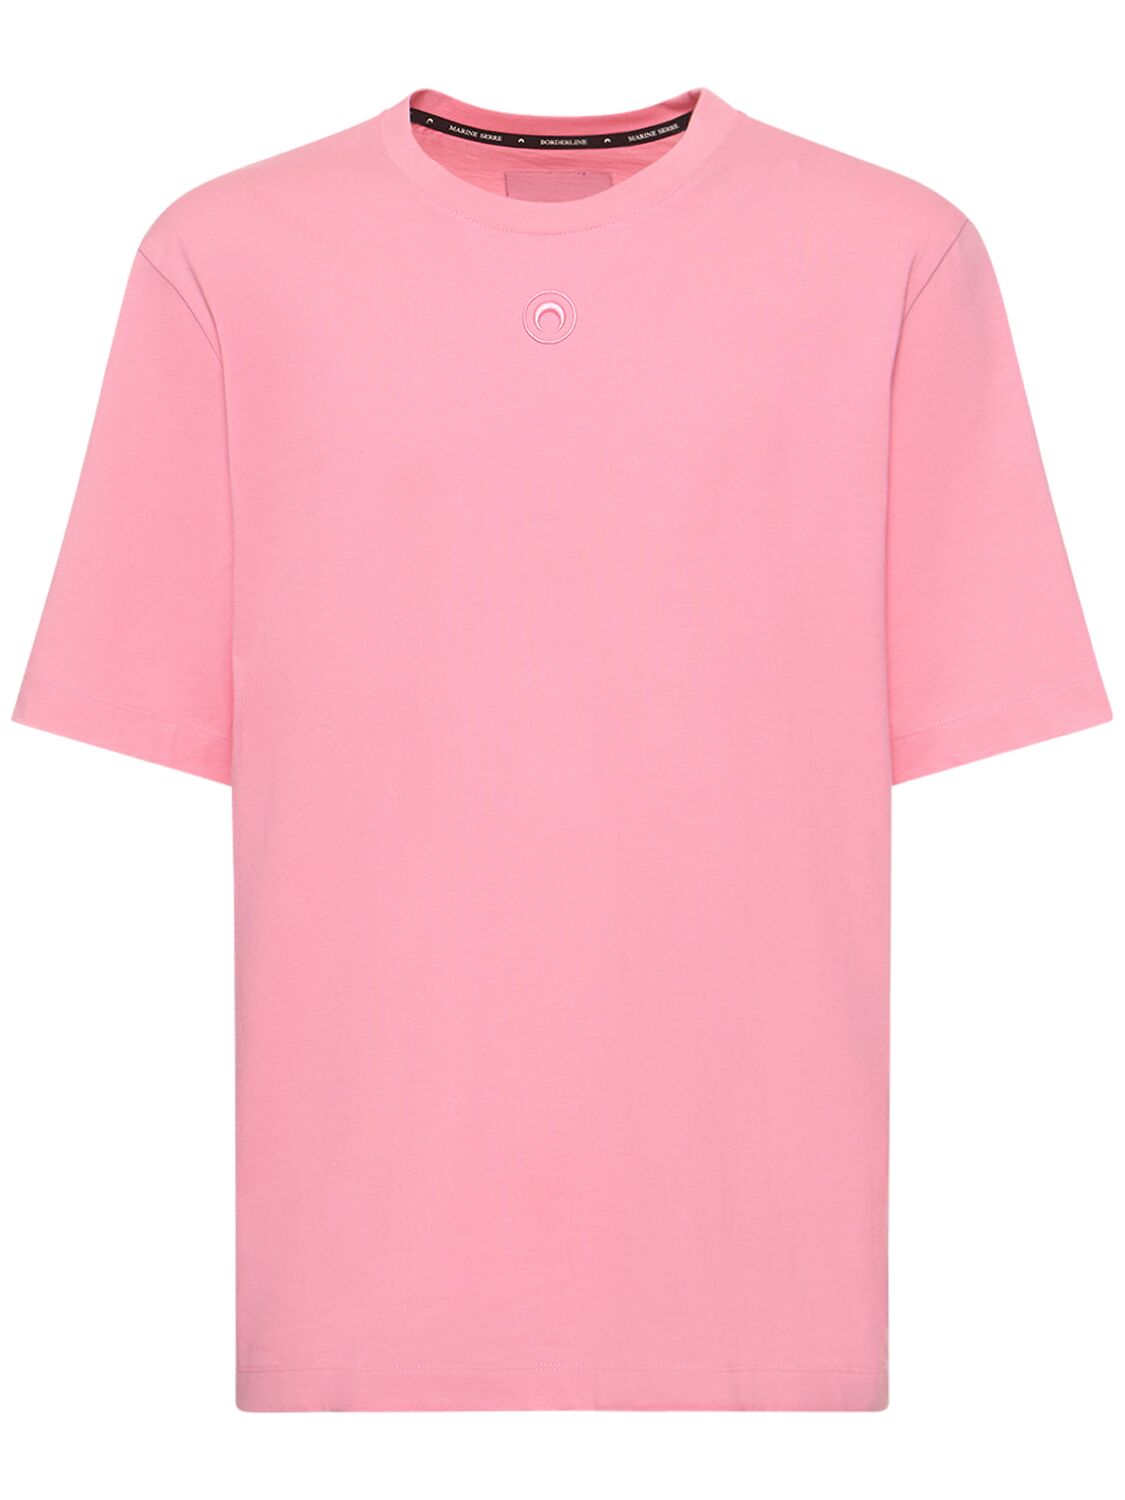 Marine Serre Crescent Moon 棉t恤 In Pink